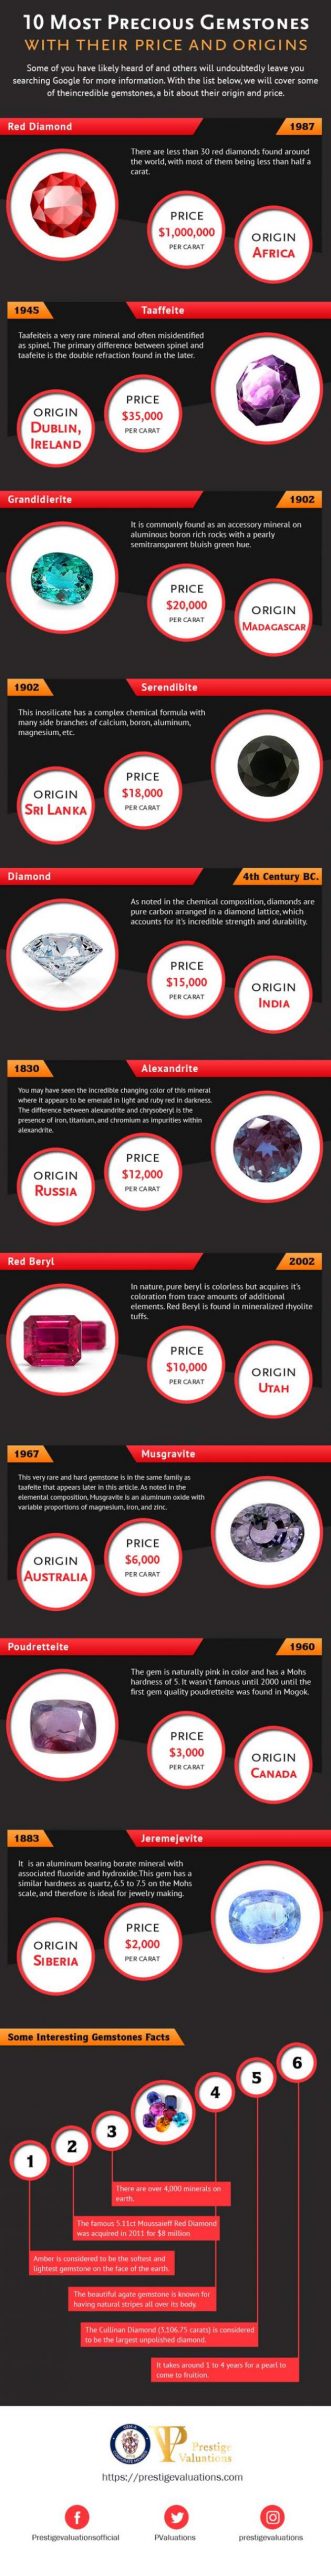 10 Most Precious Gemstones